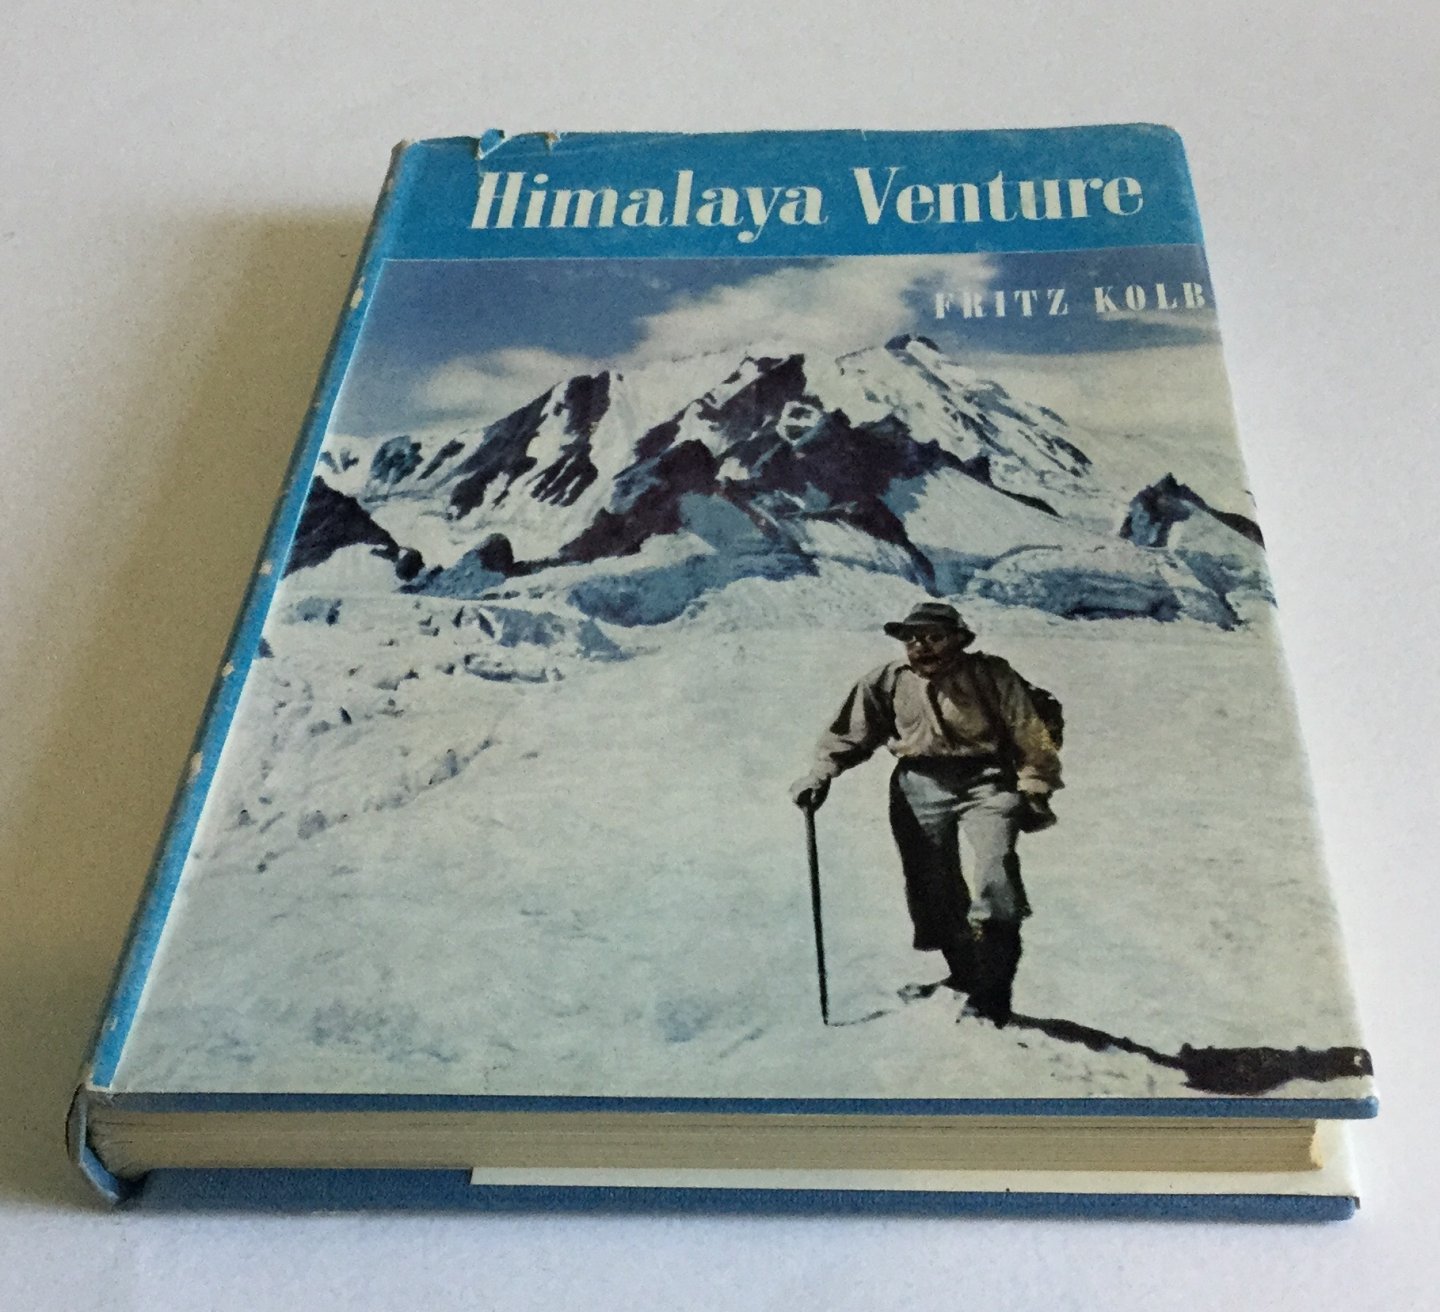 Kolb, Fritz - Himalaya Venture